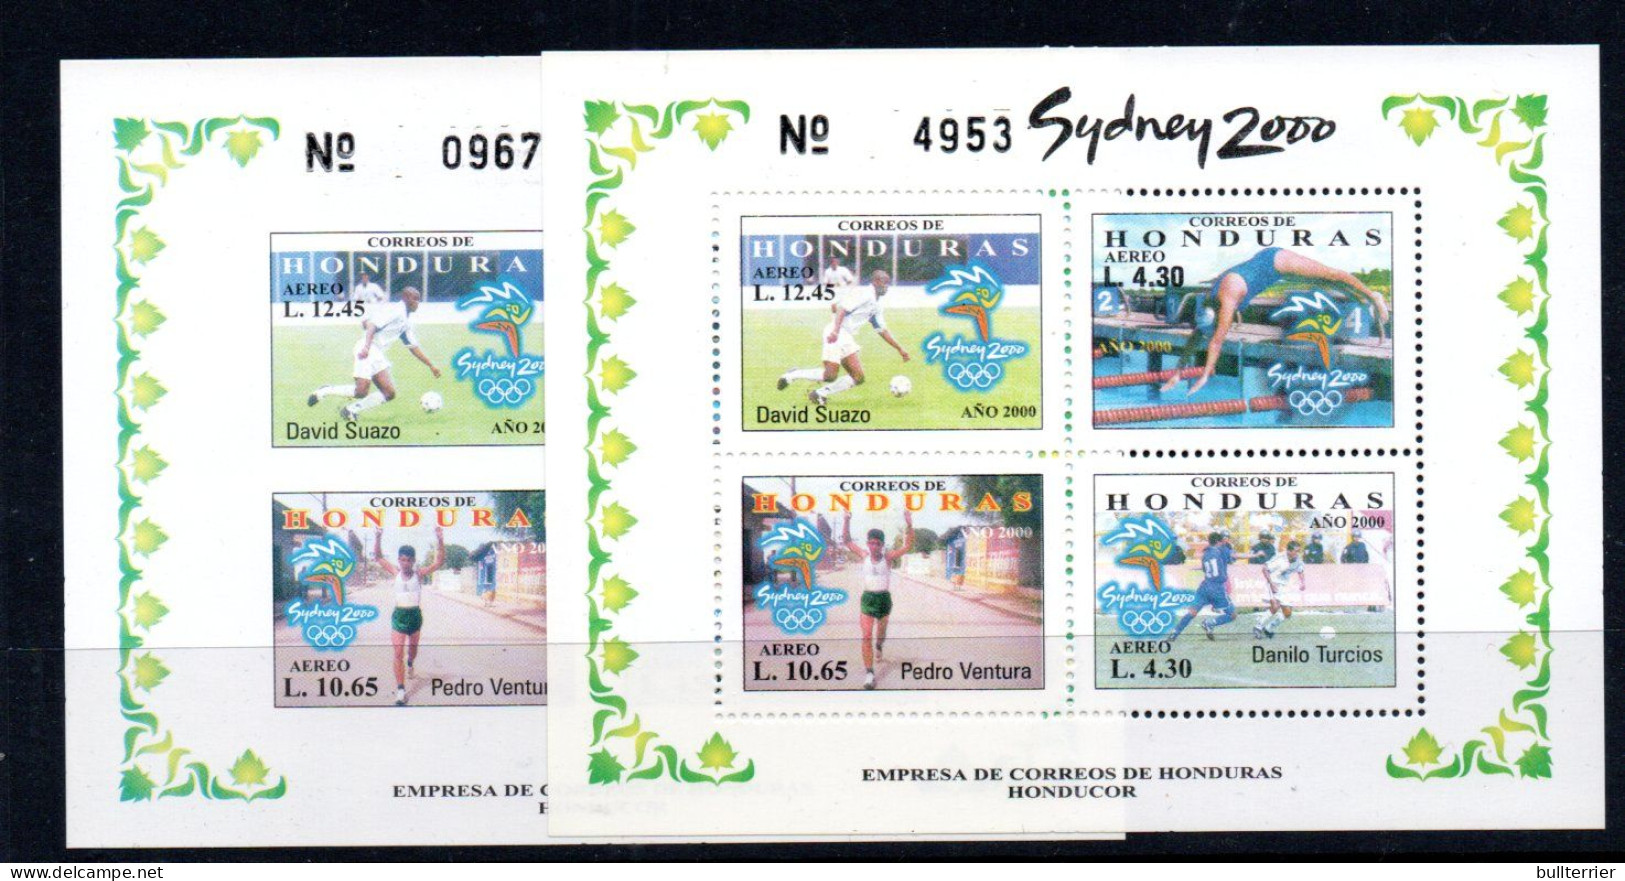 OLYMPICS - Honduras - 2000 - Sydney Olympics S/sheets Perf & Imperf MNH, - Summer 2000: Sydney